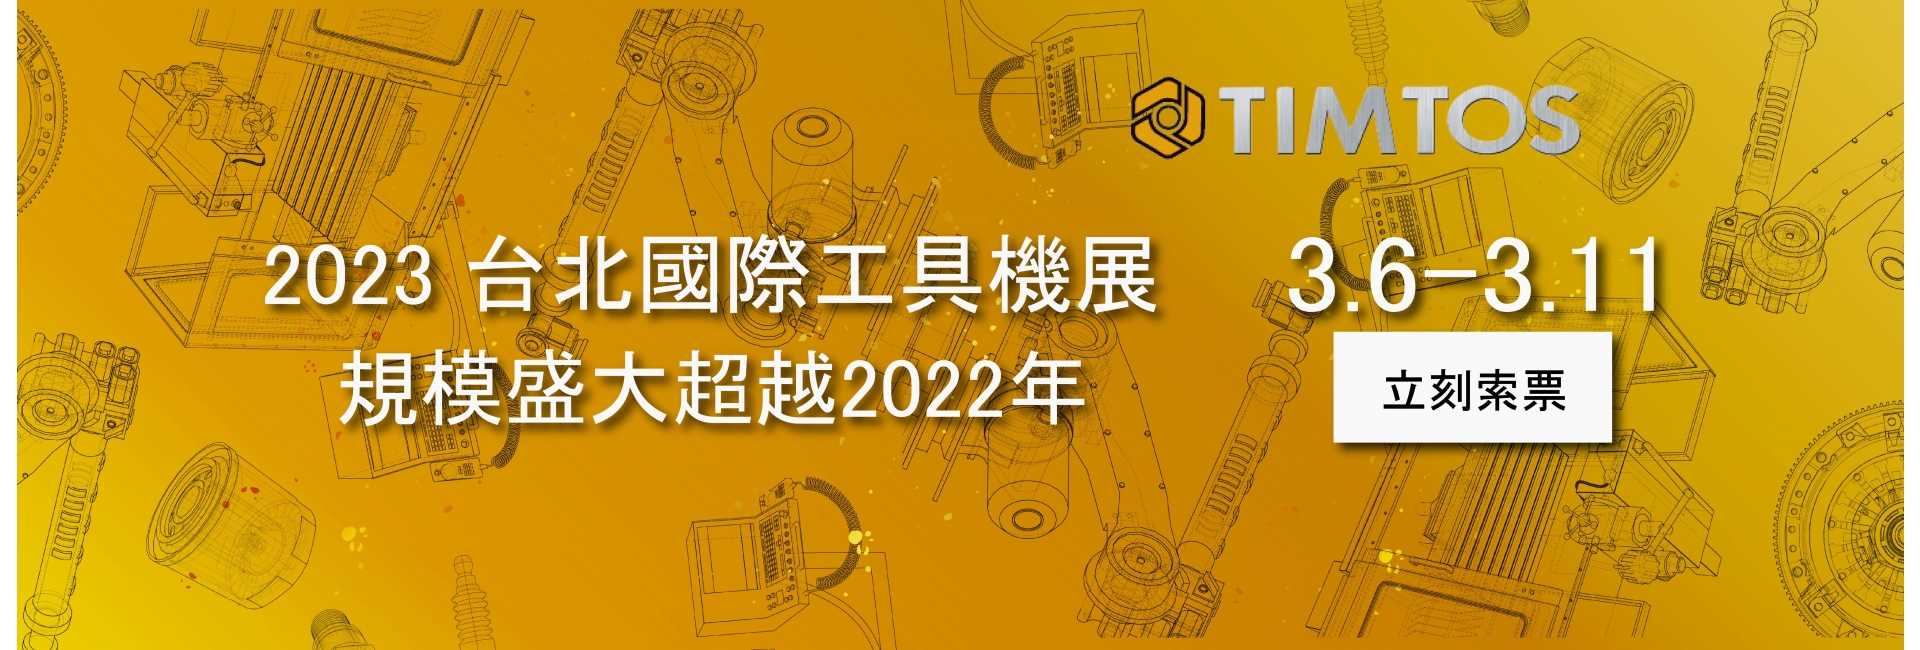 2023 TIMTOS 台北國際工具機展 盛大展開！